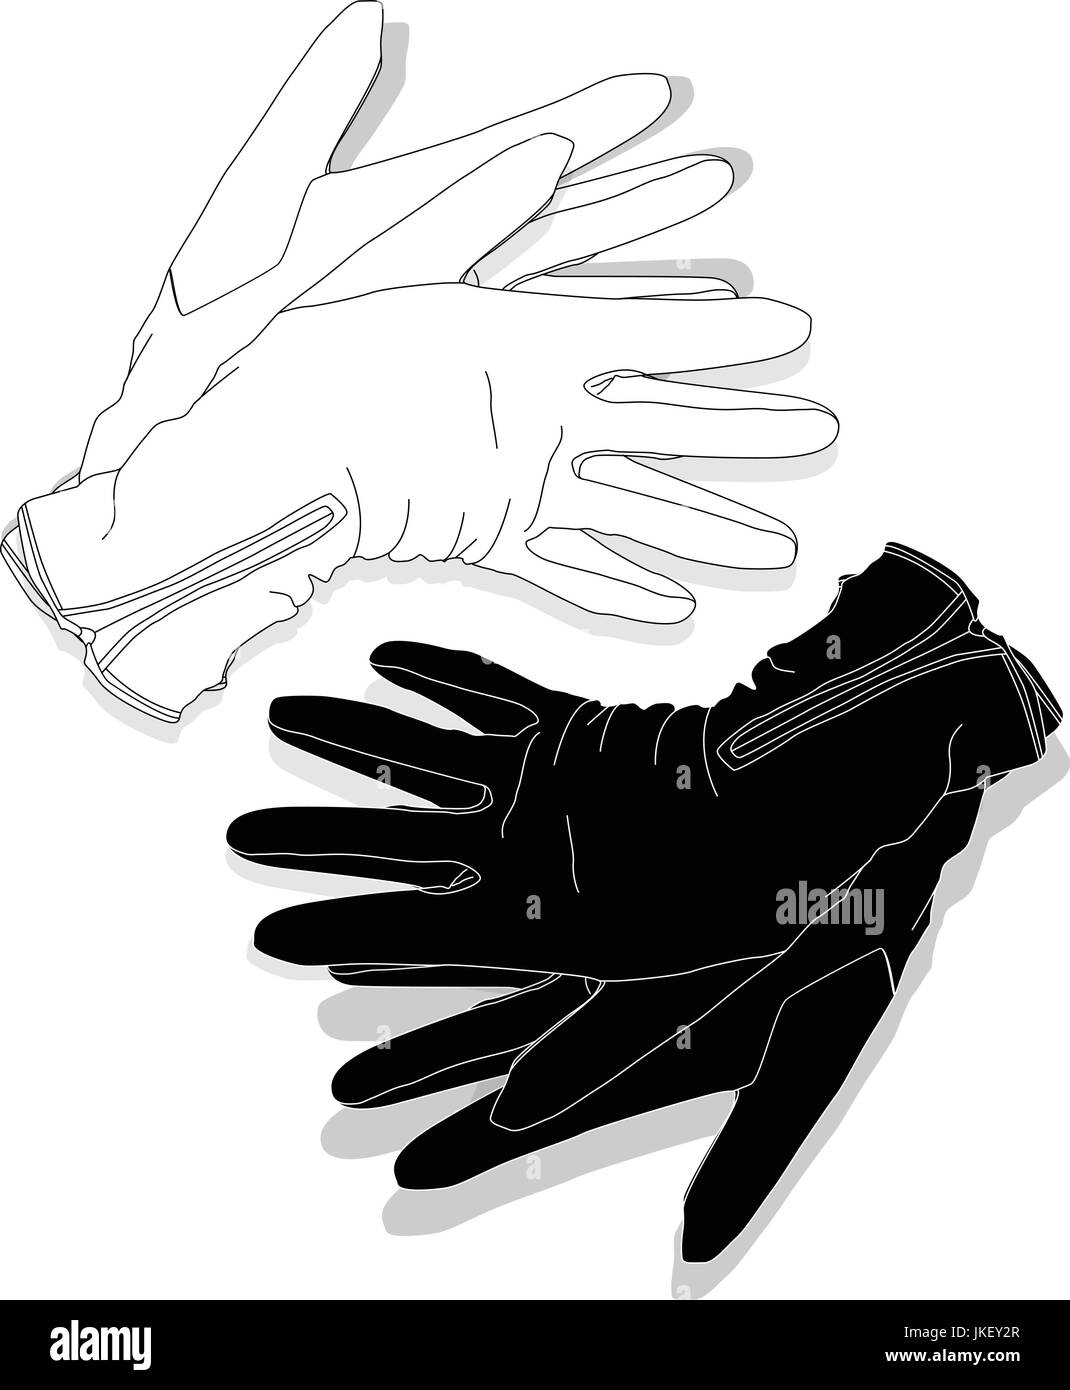 gloves set fashion image isolated Stock Vector